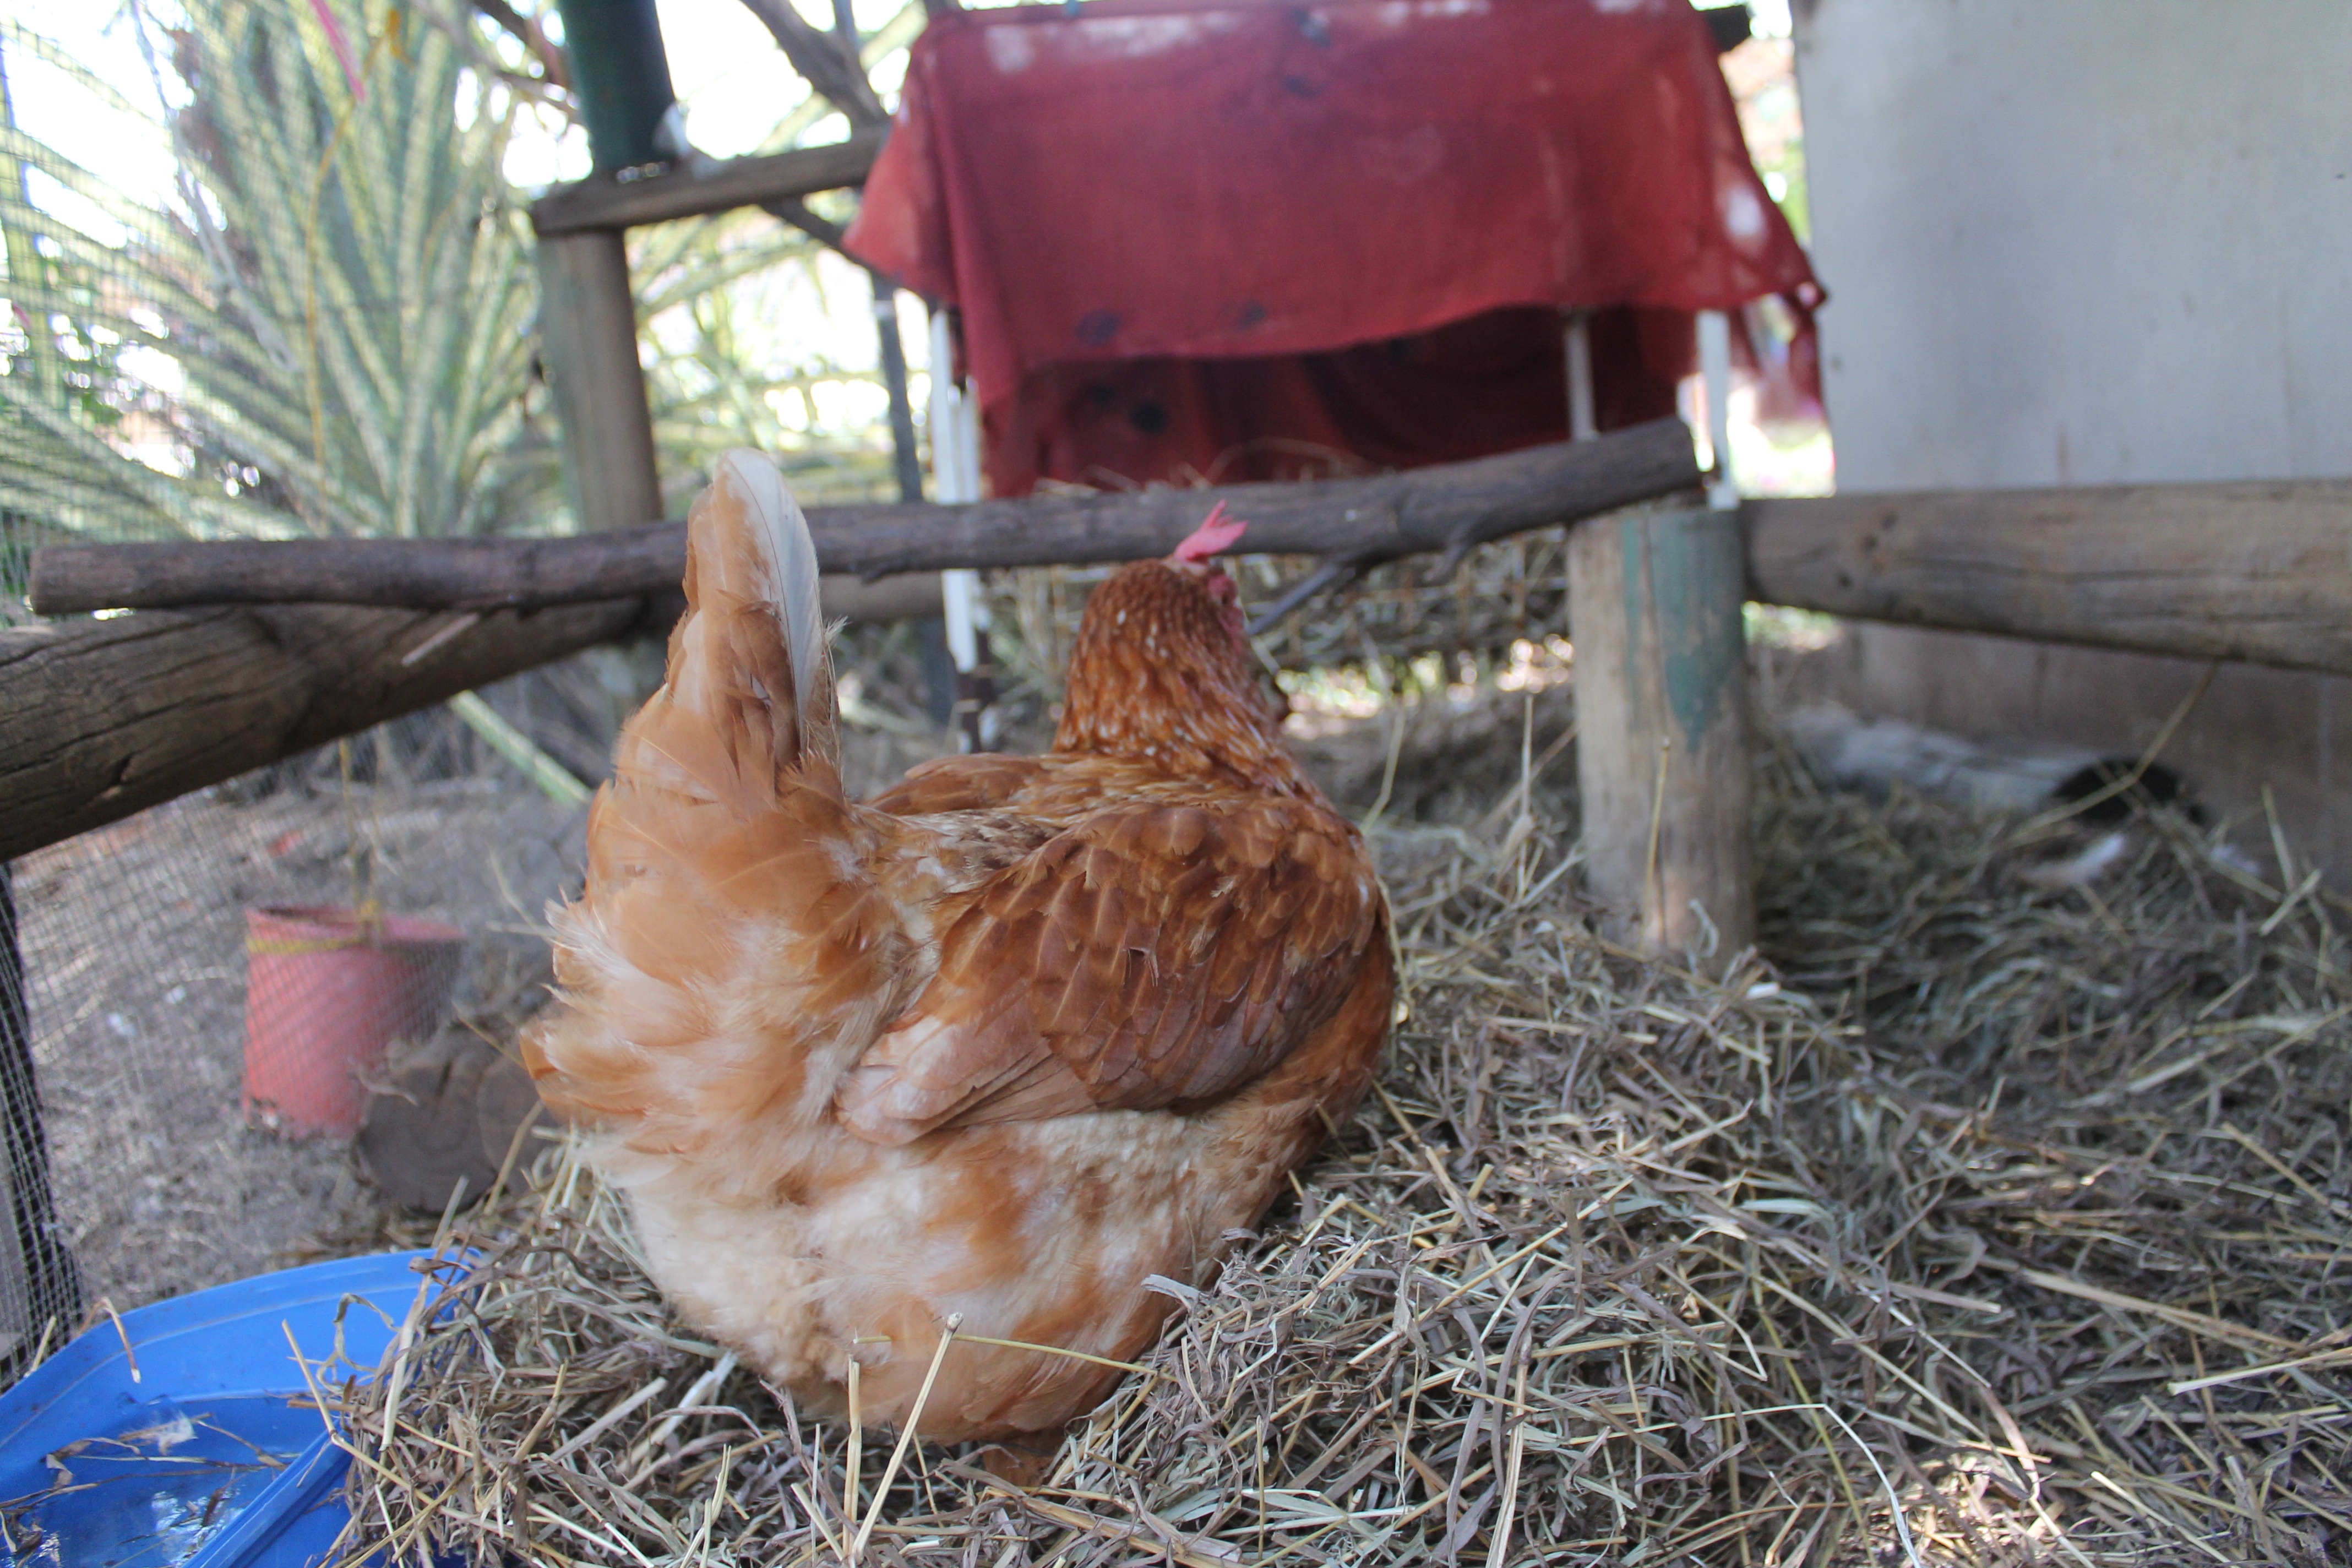 The hens love scratching around in deep straw.